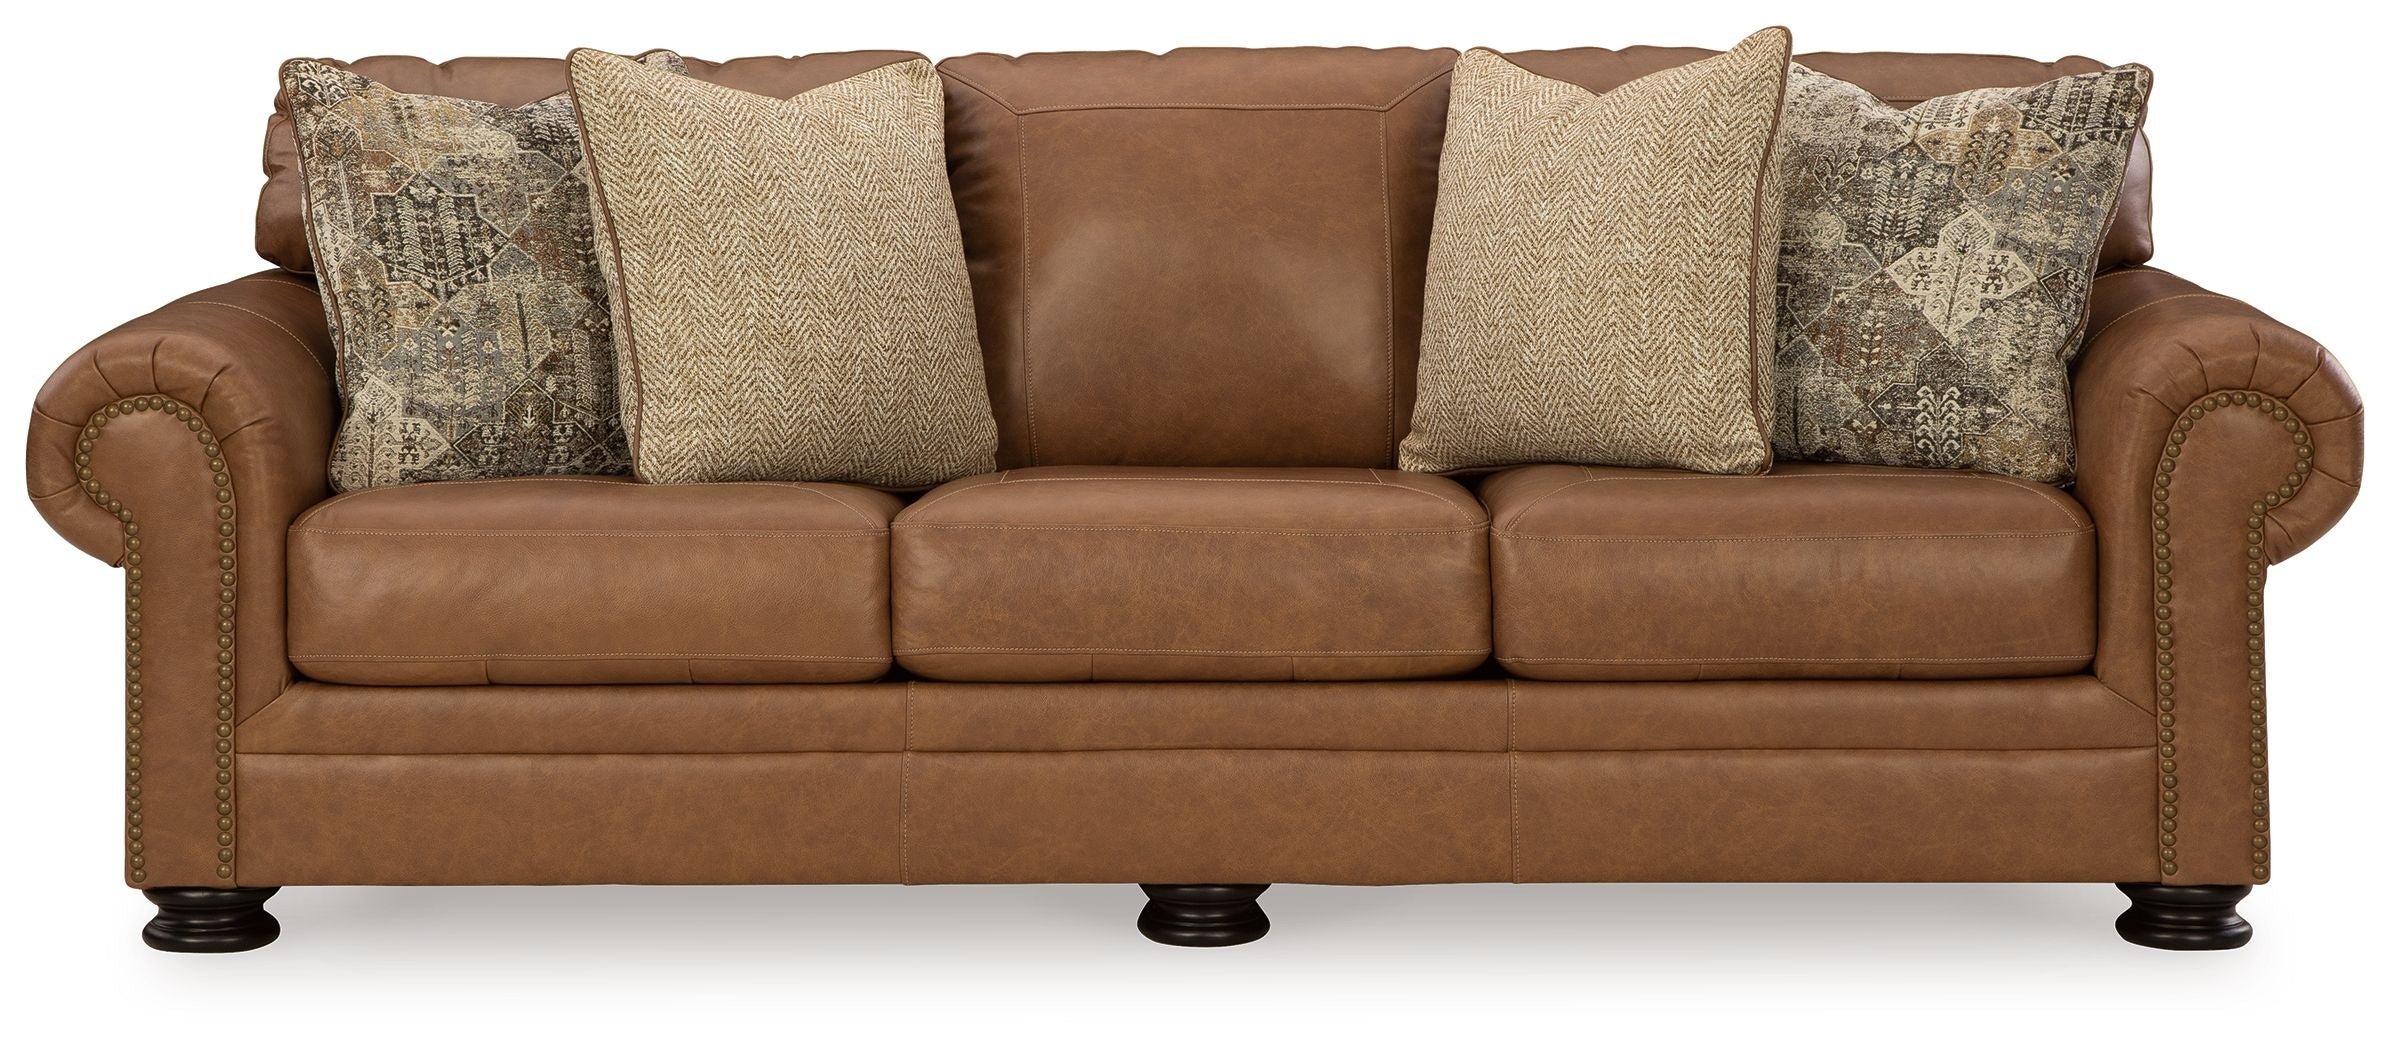 brown-leather-sofa